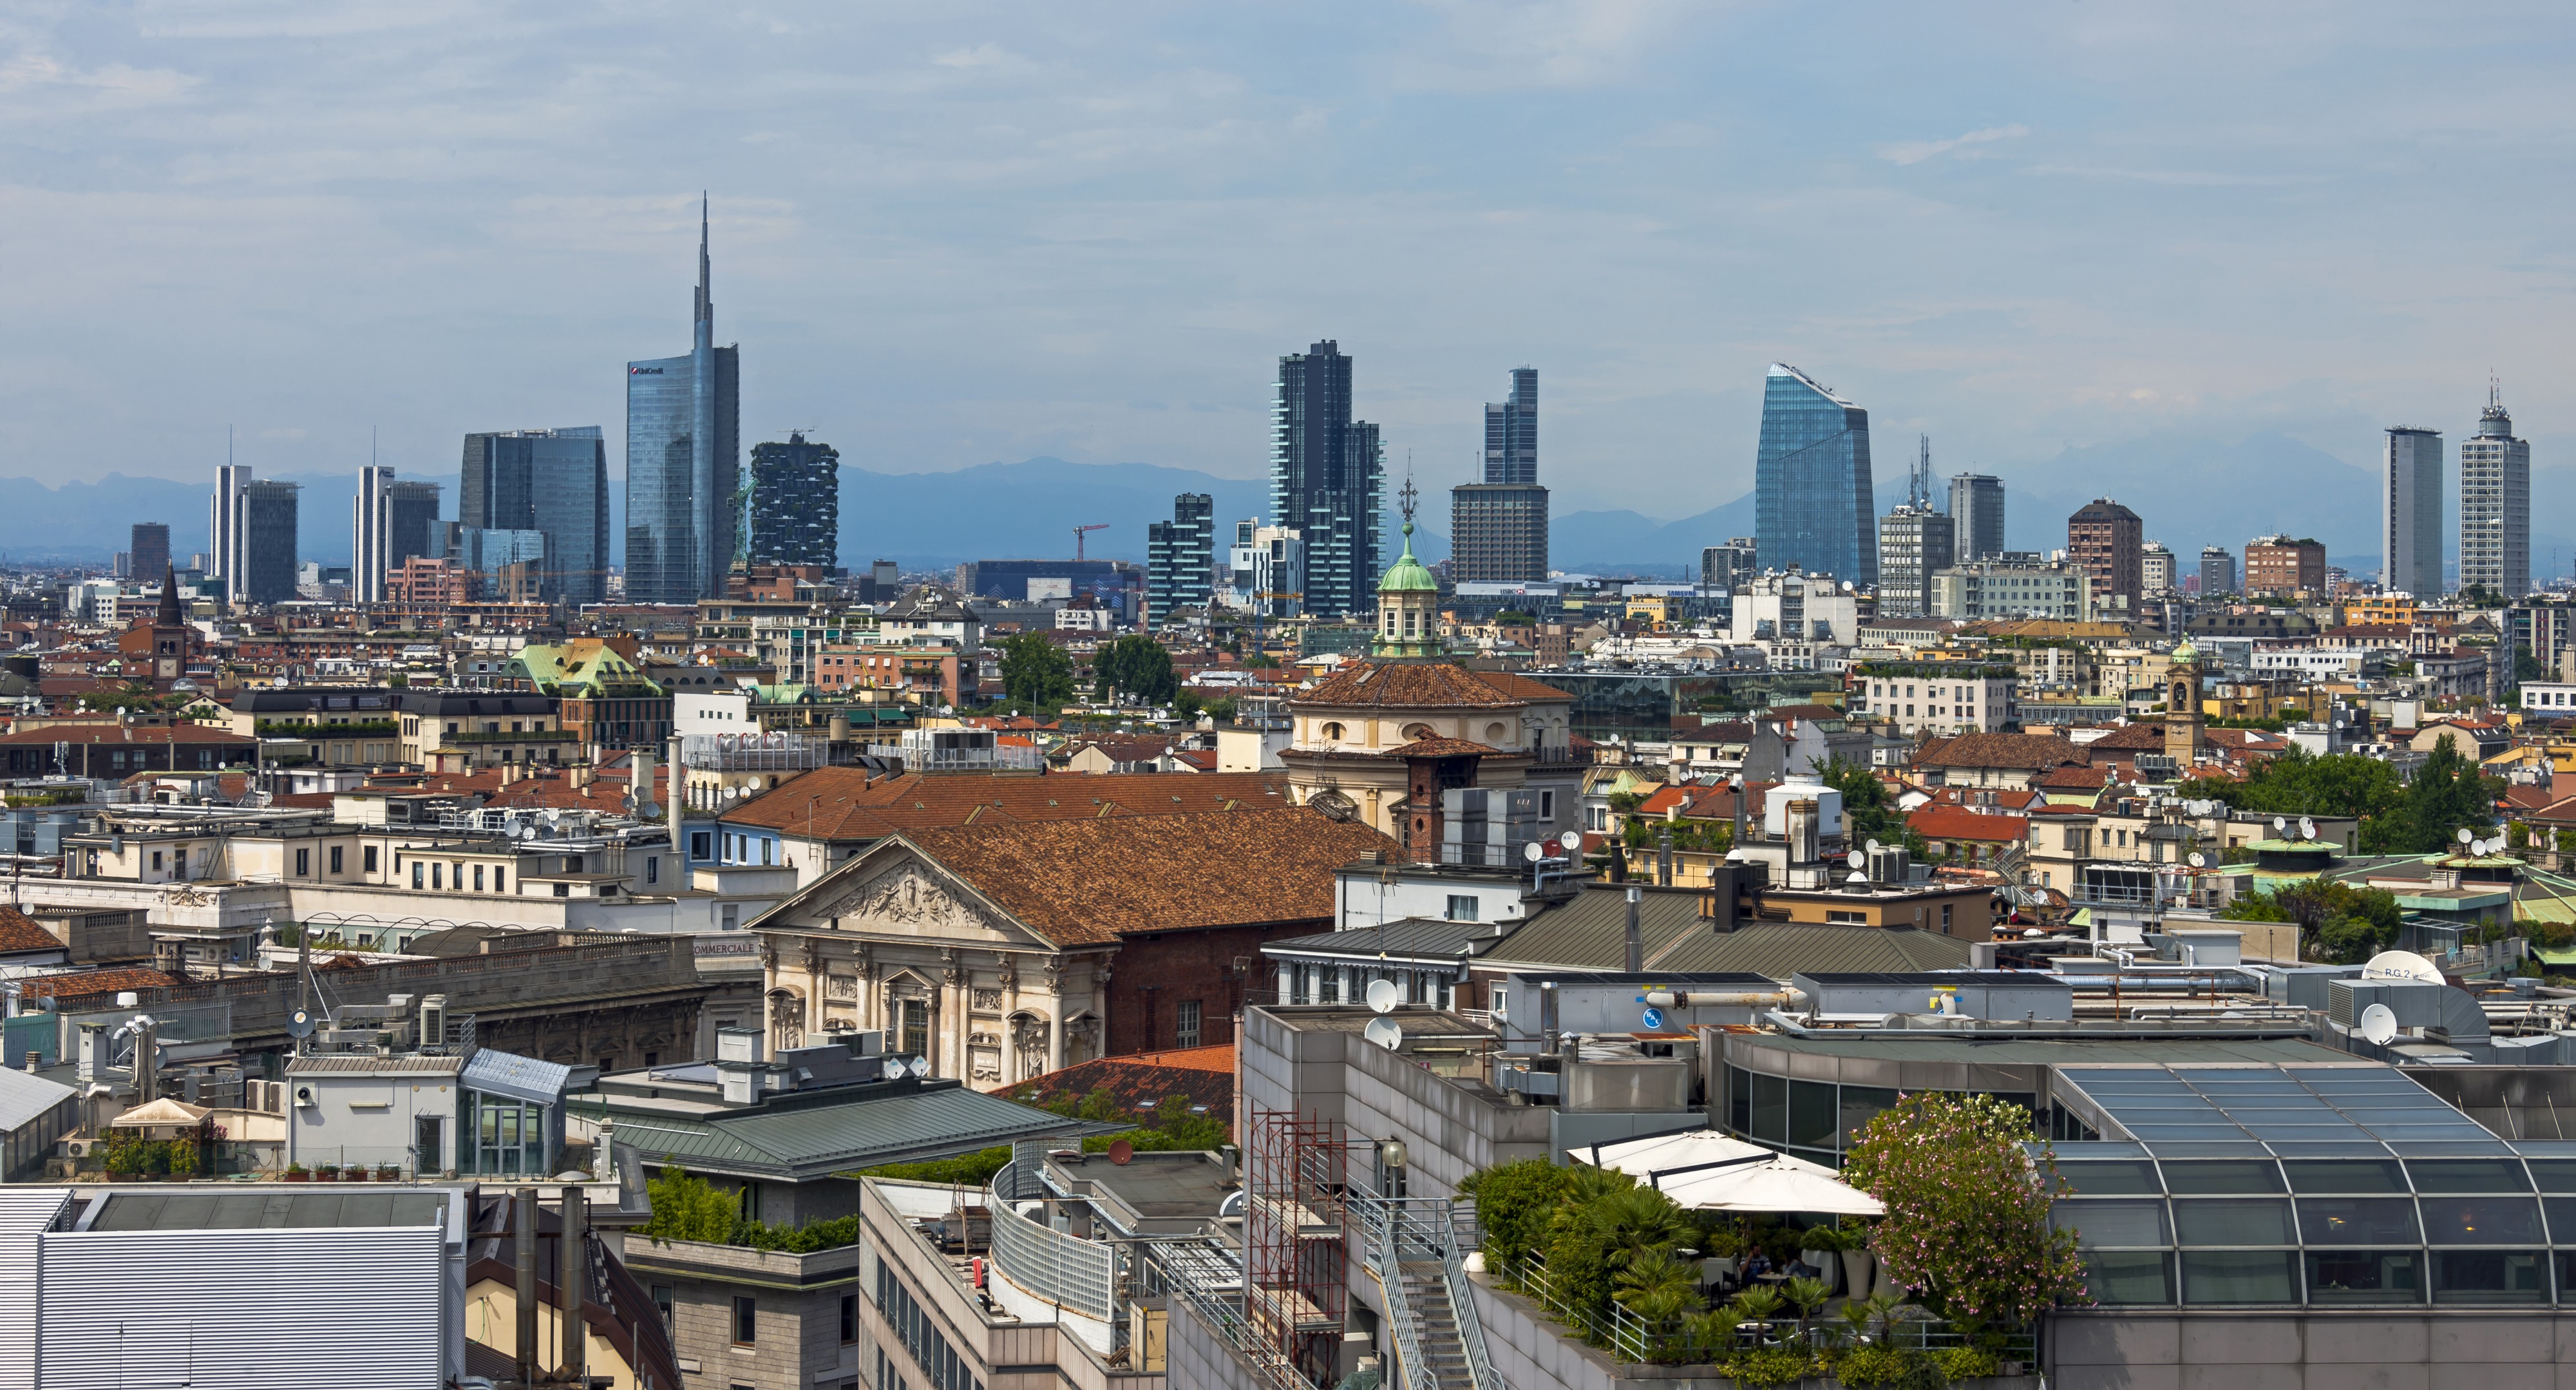 Full Milan skyline from Duomo roof